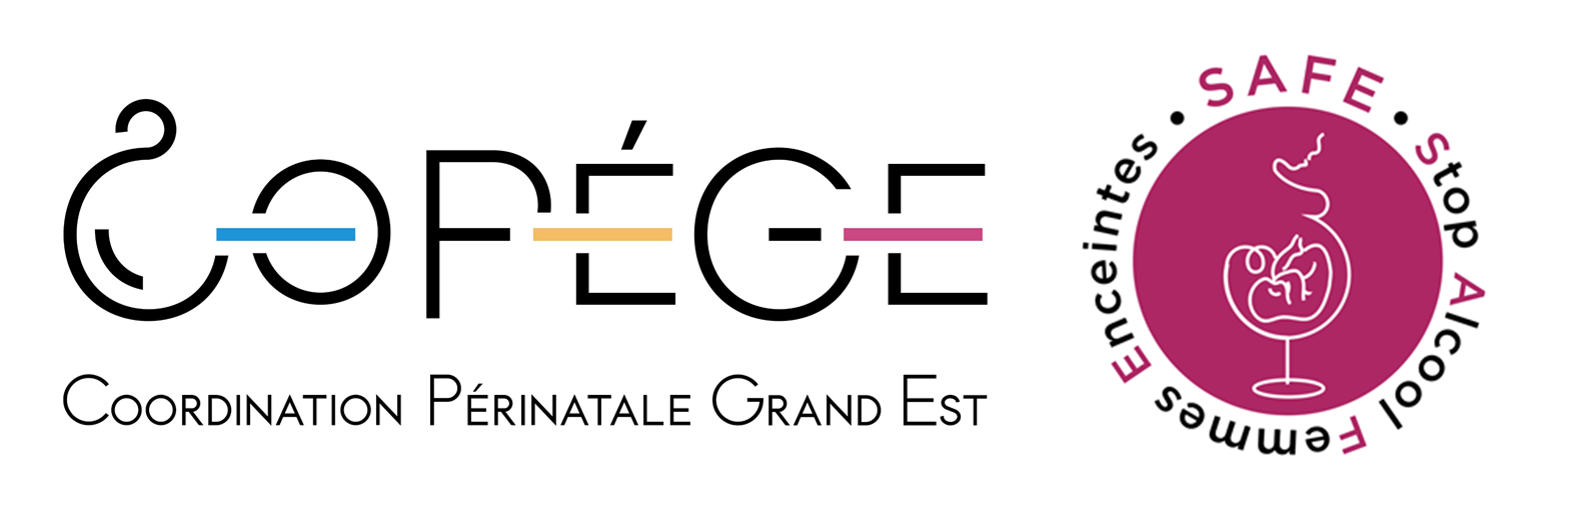 Logos CoPèGE (Coordination Périnatale Grand Est) - SAFE 